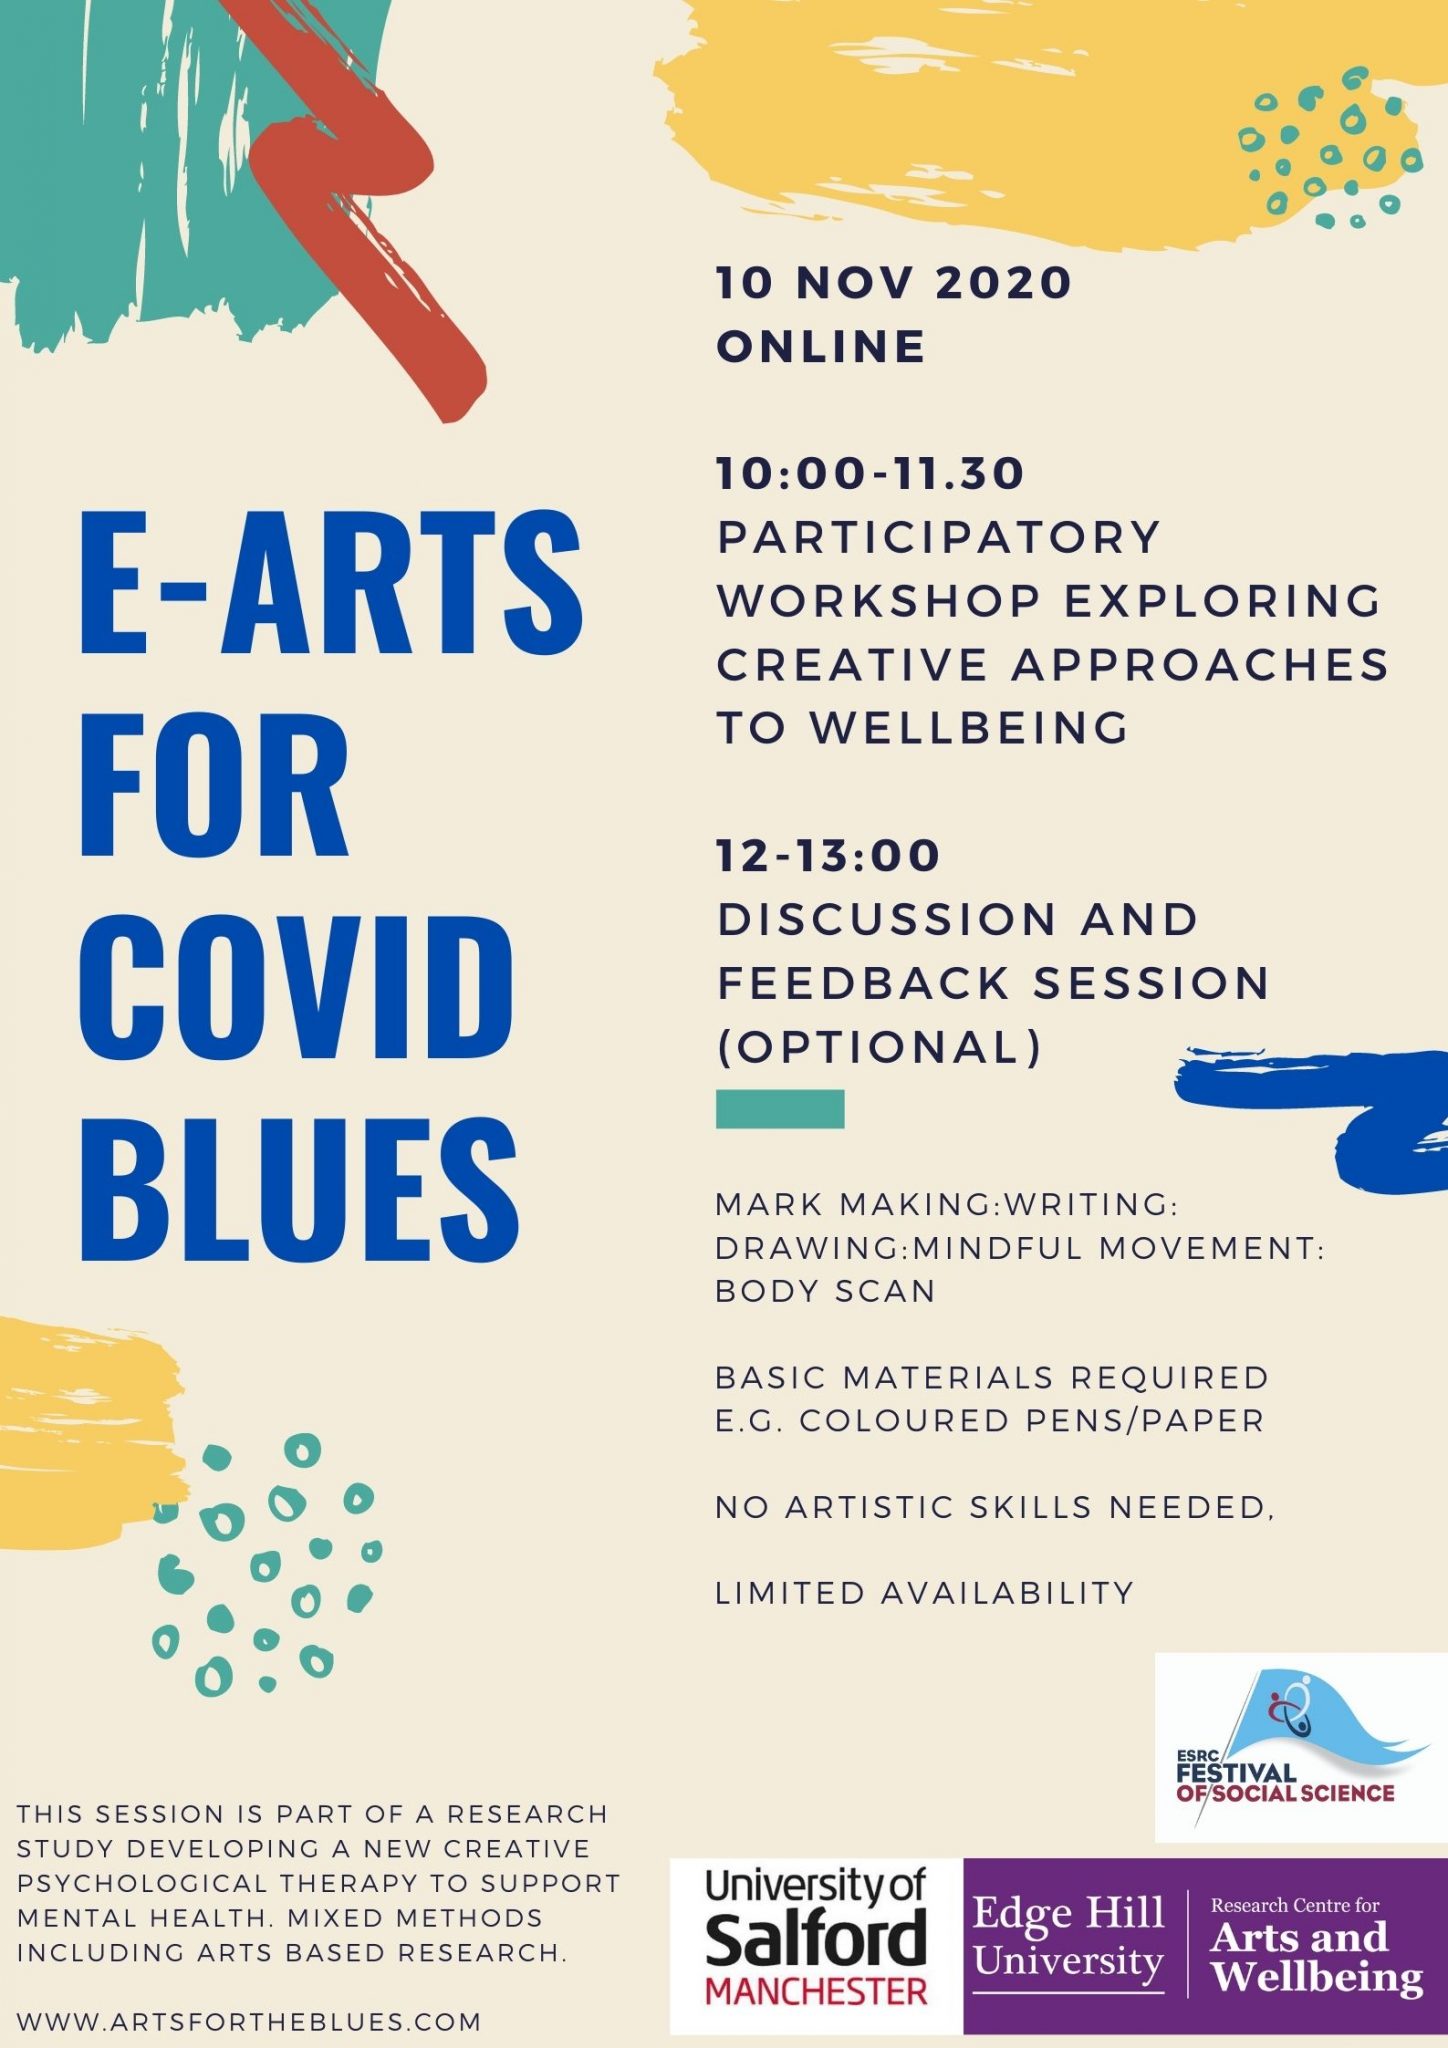 E-arts for covid blues: online workshop